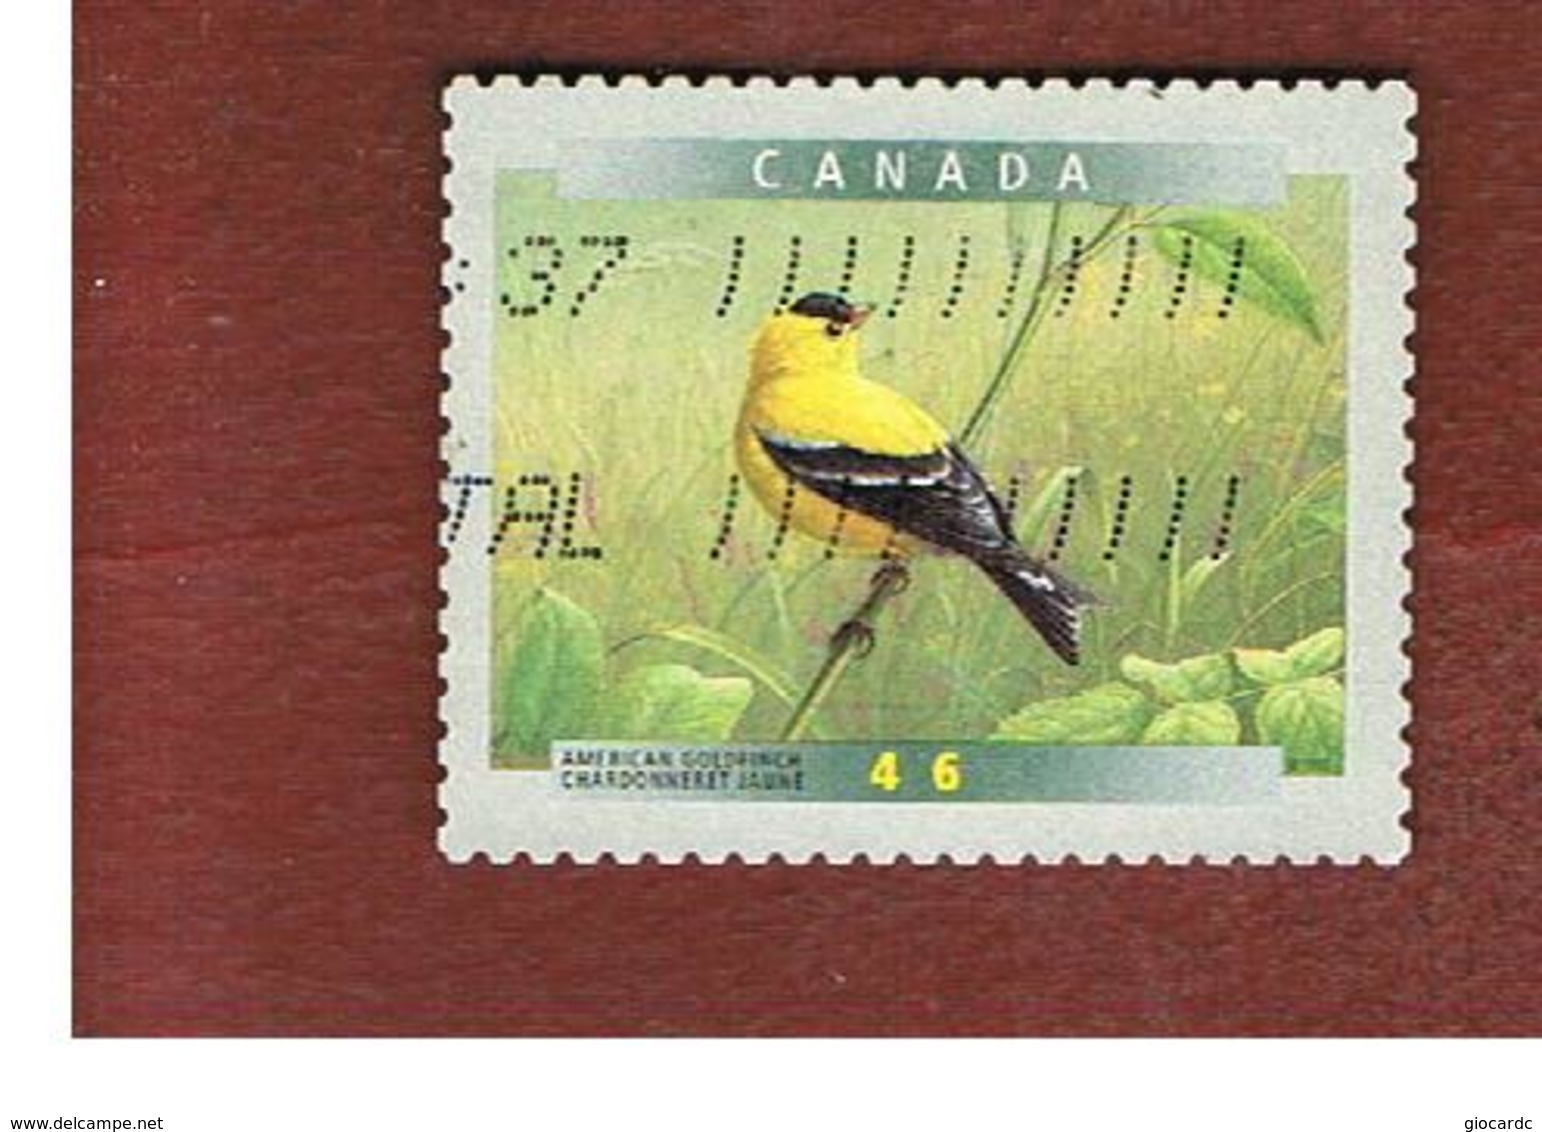 CANADA   -  SG 1867  -  1999   CANADIAN BIRDS: AMERICAN GOLDFINCH                -      USED - Oblitérés